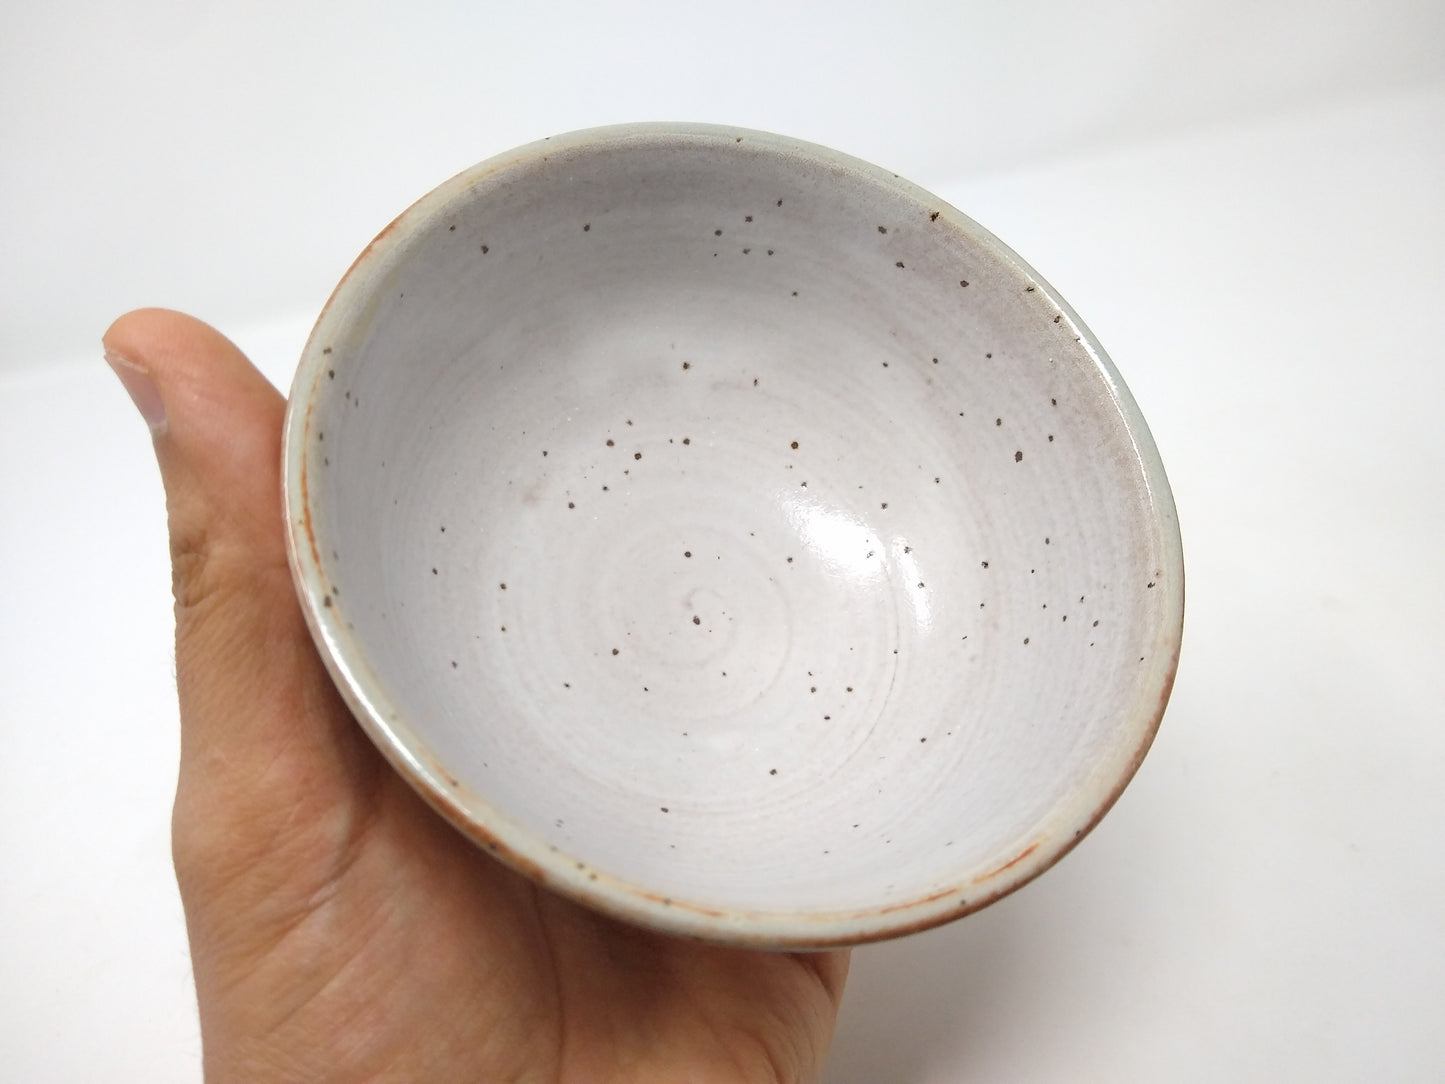 380ml Blue Shino Kyusu with 2 matching bowls